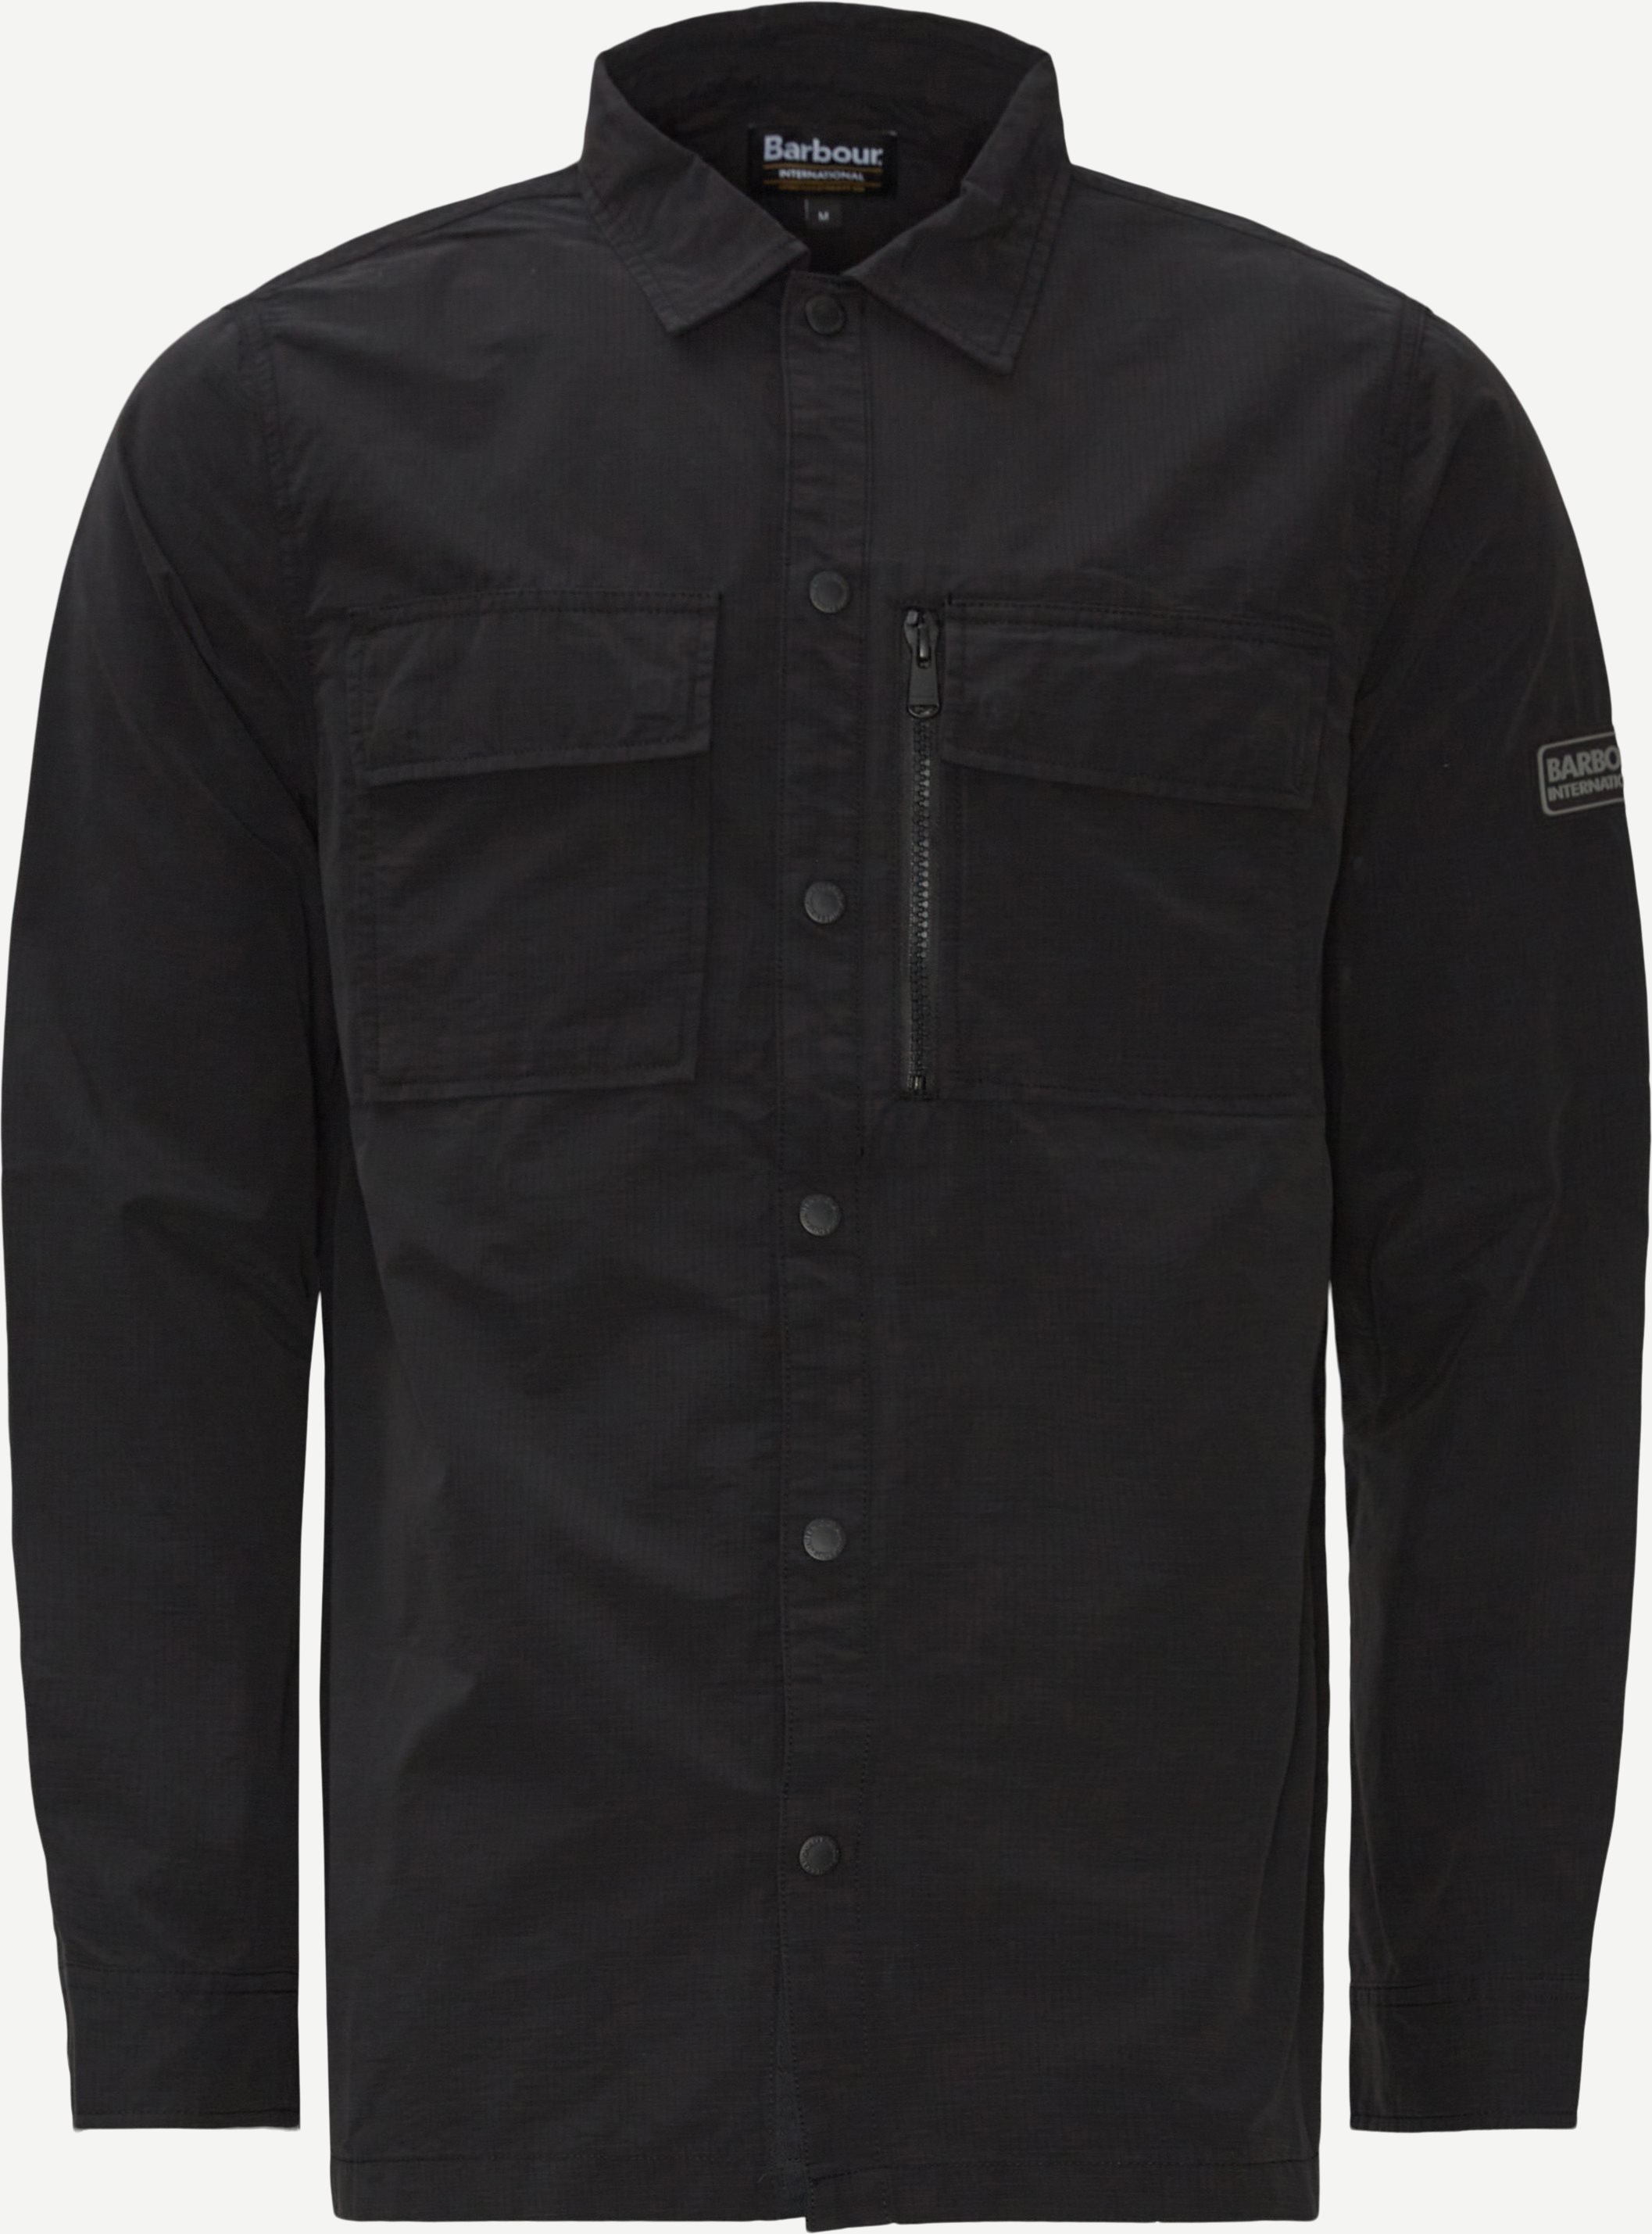 Shirts - Regular fit - Black